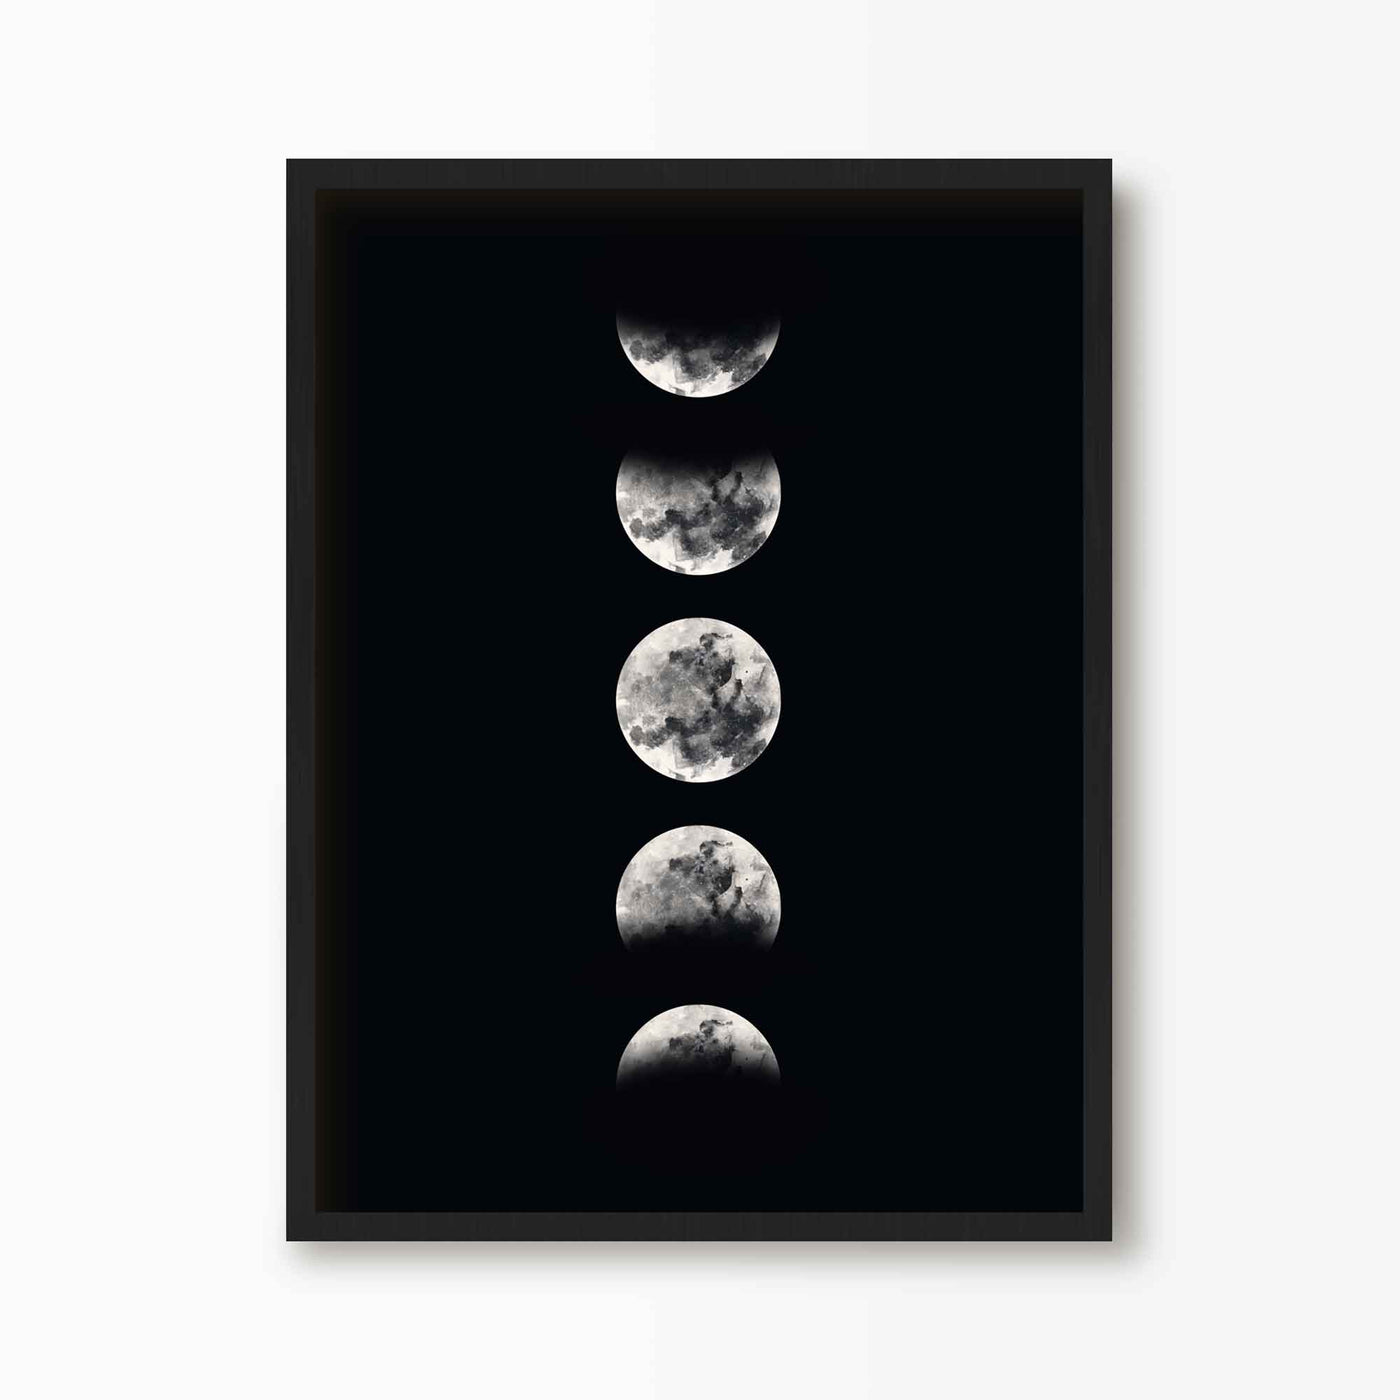 Green Lili 30x40cm (12x16") / Black Frame Black & White Moon Phases Print